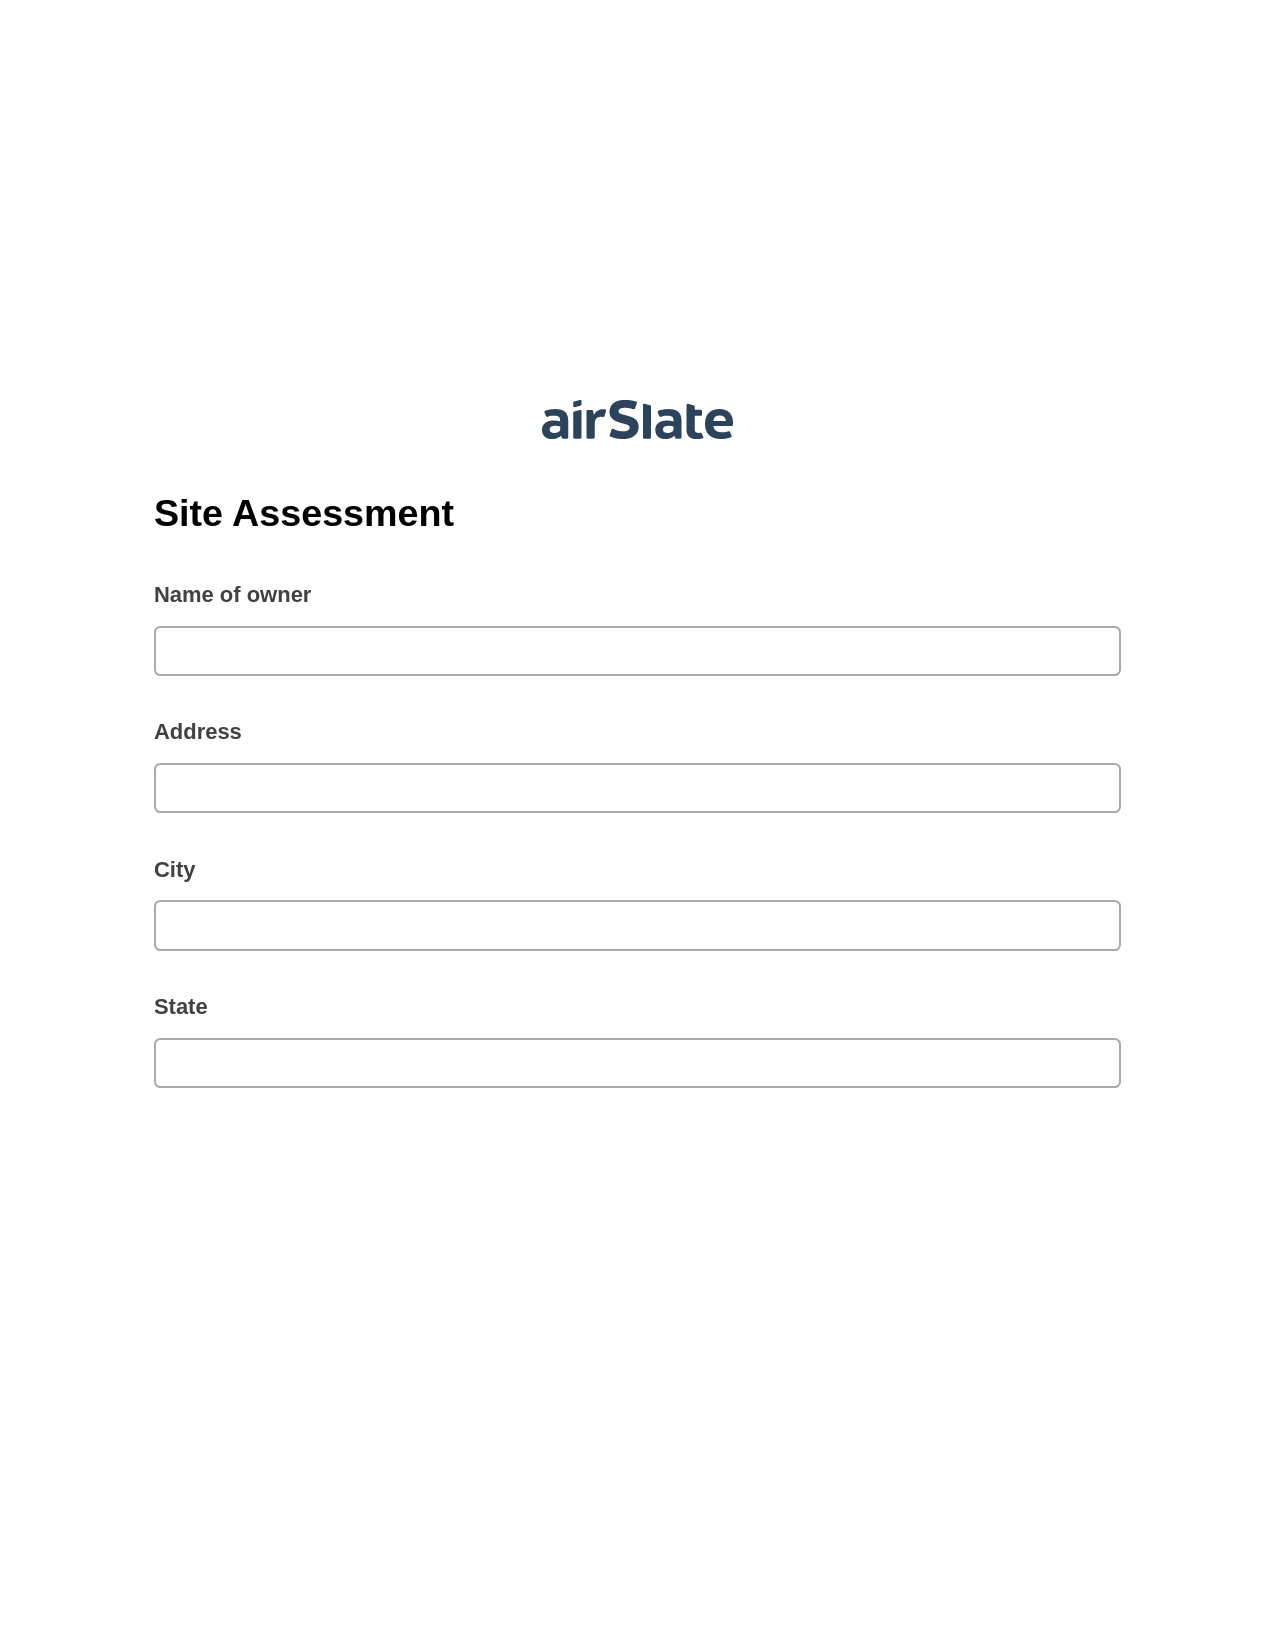 Multirole Site Assessment Pre-fill Slate from MS Dynamics 365 Records Bot, Invoke Salesforce Process Bot, Slack Notification Postfinish Bot